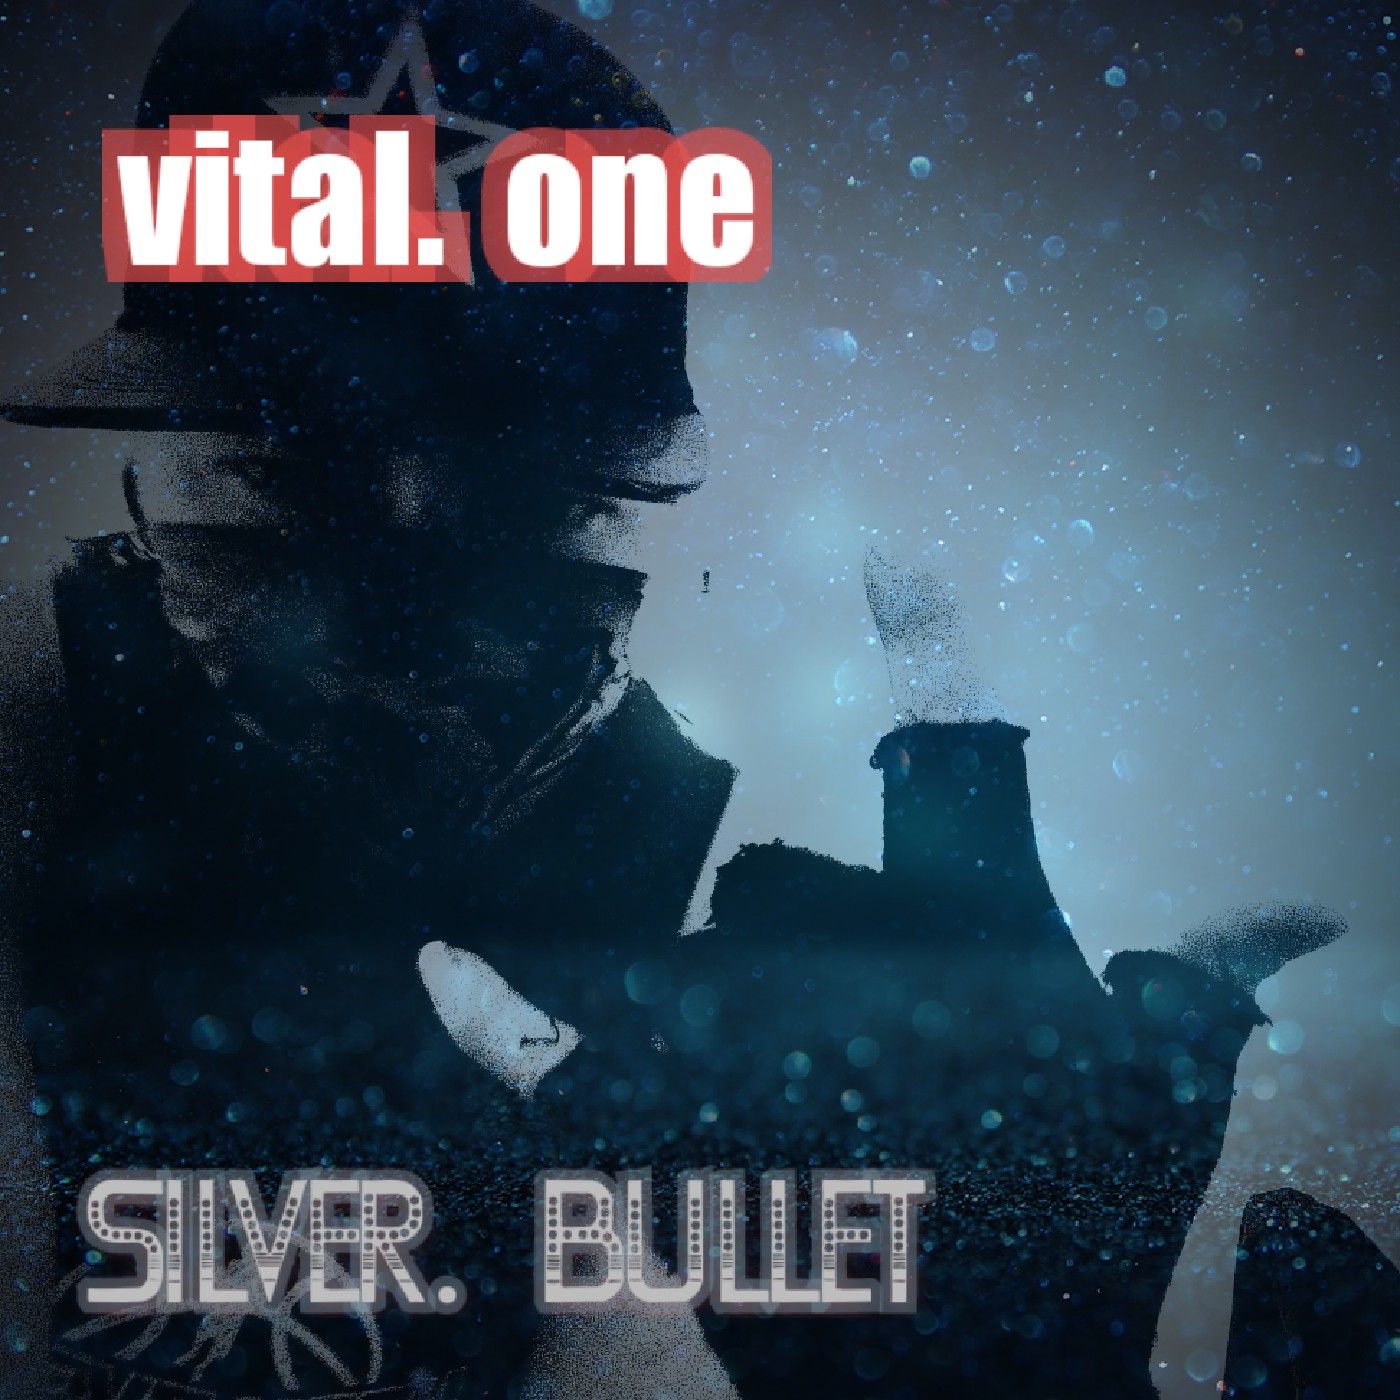 Vital. One. +++. Silver. Bullet. +++